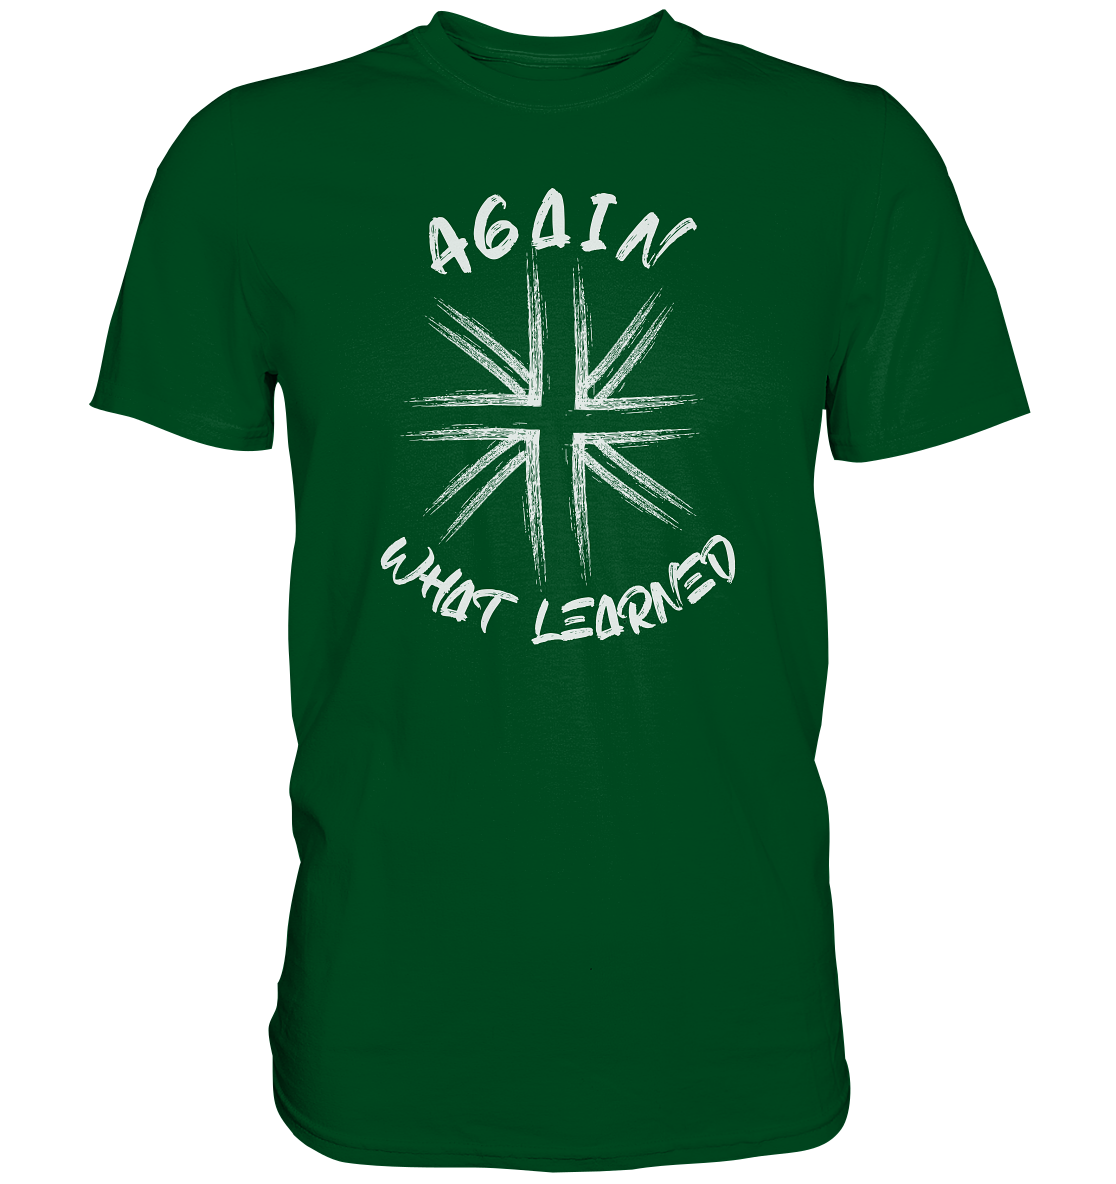 "Again what learned" - Premium Shirt